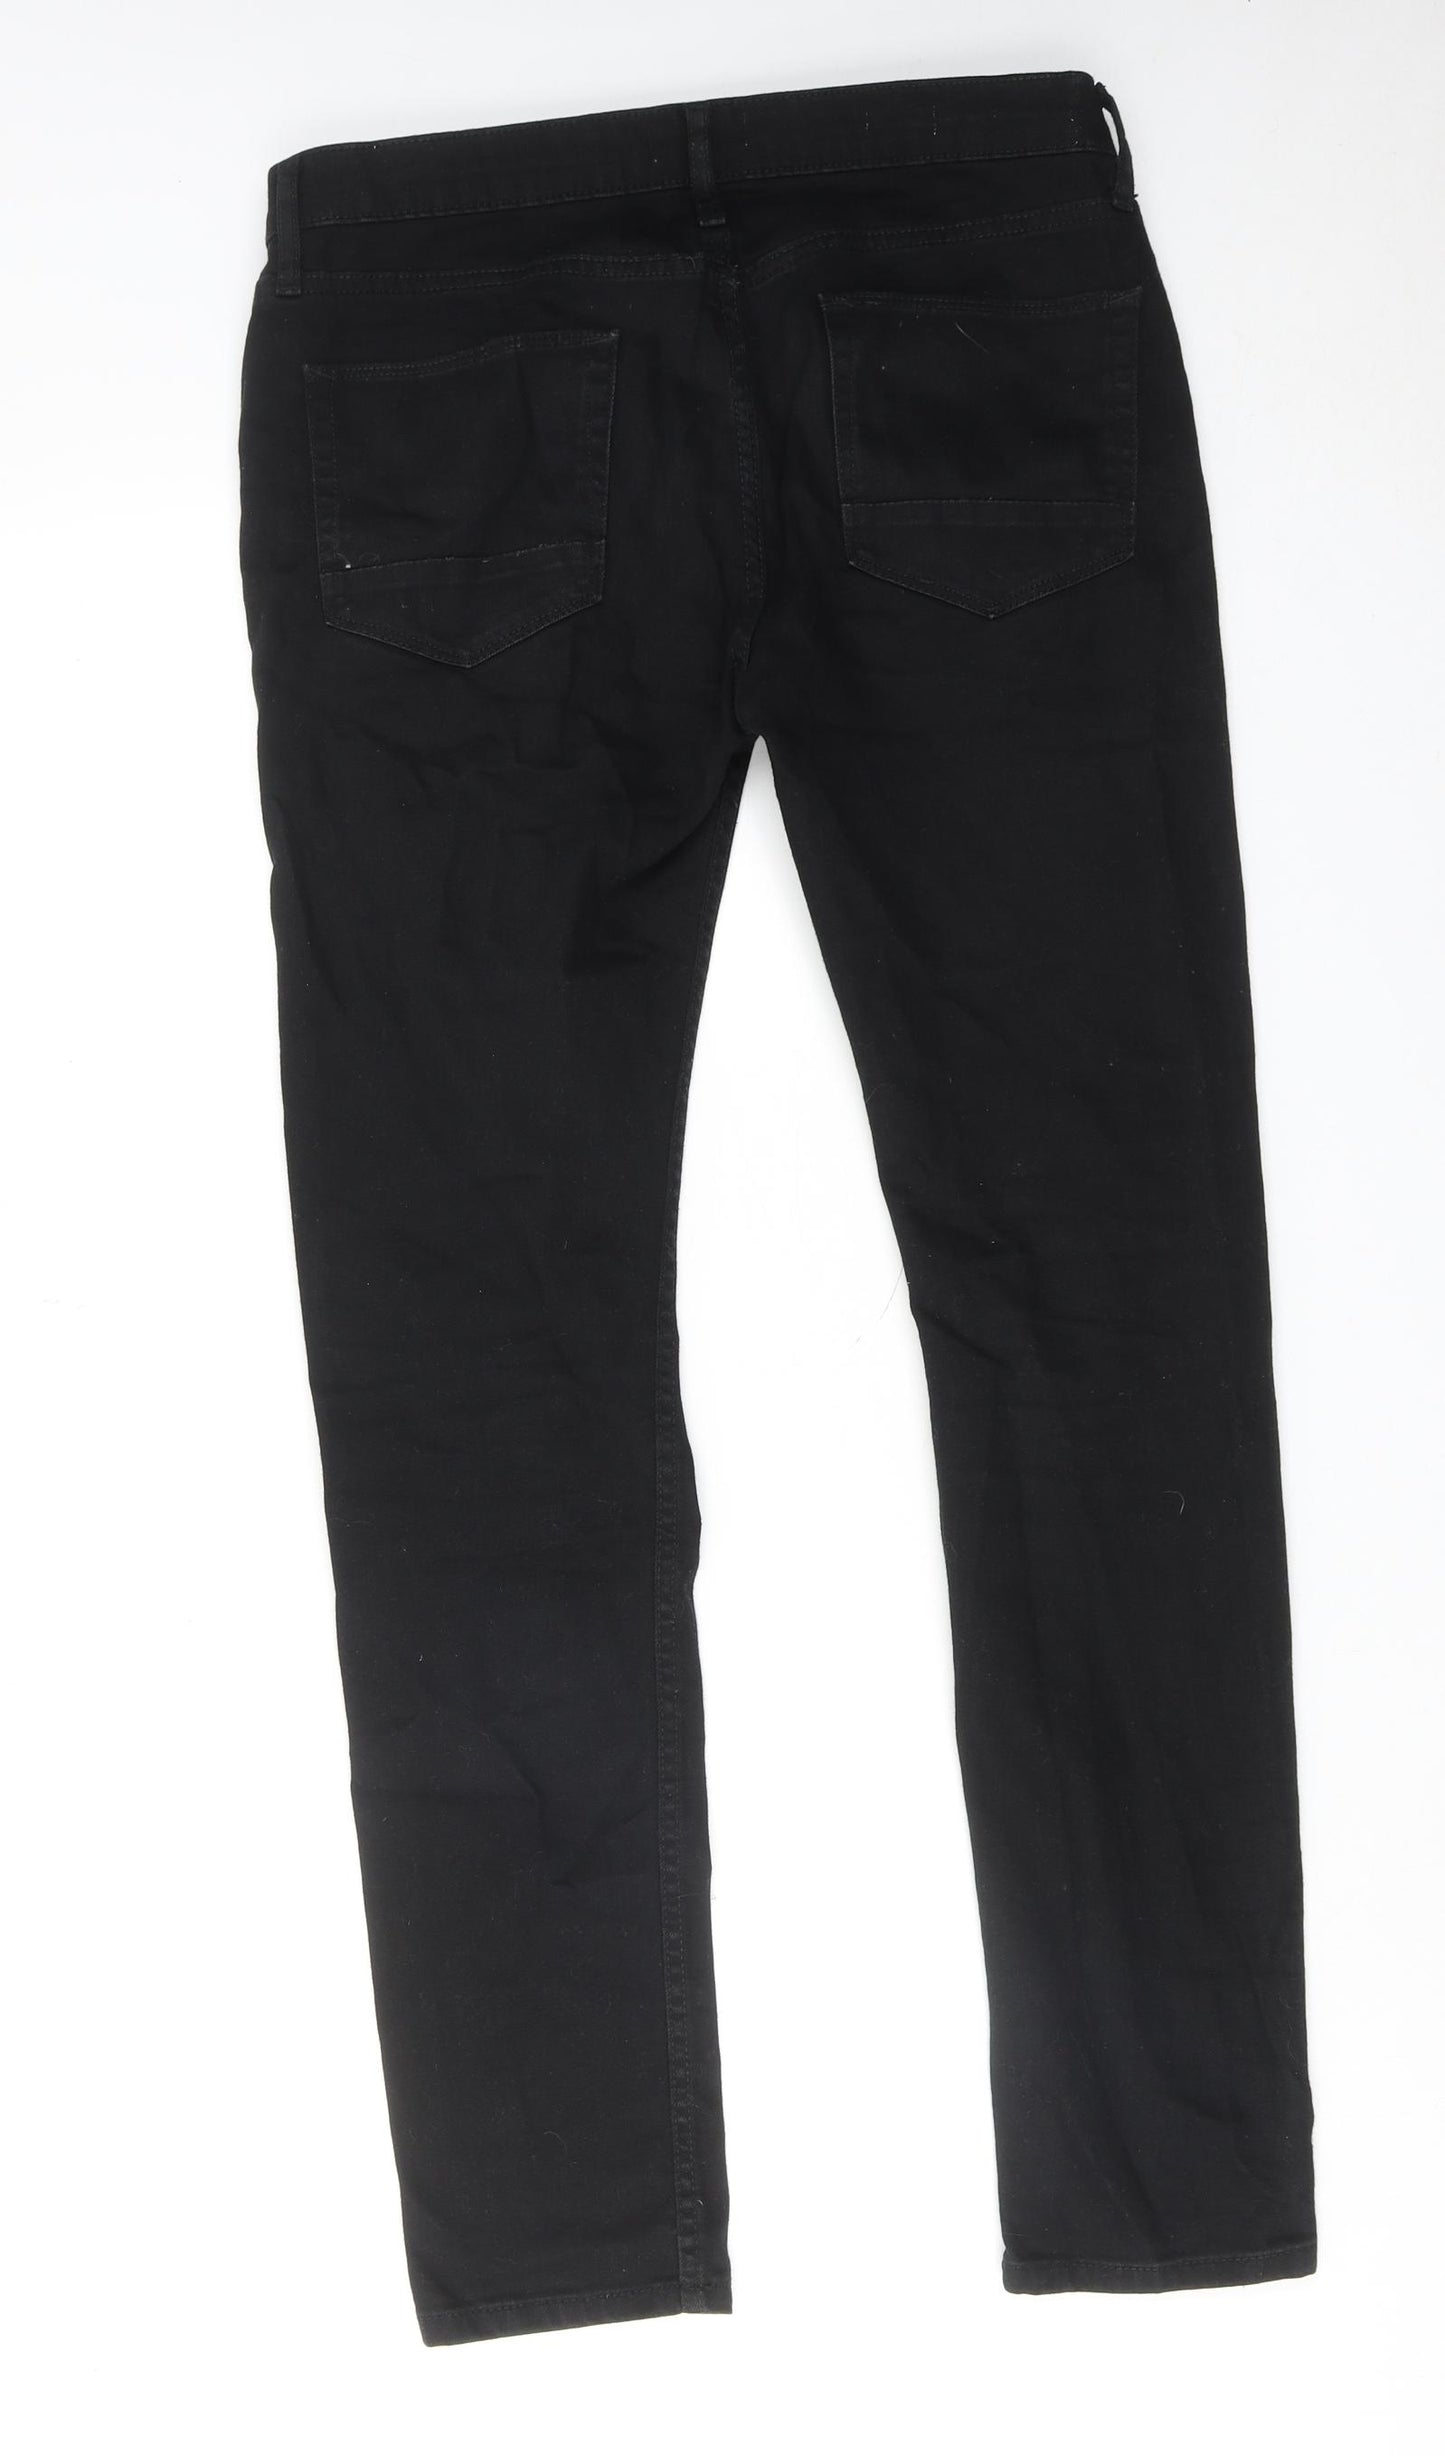 Topman Mens Black Cotton Skinny Jeans Size 32 in Regular Zip